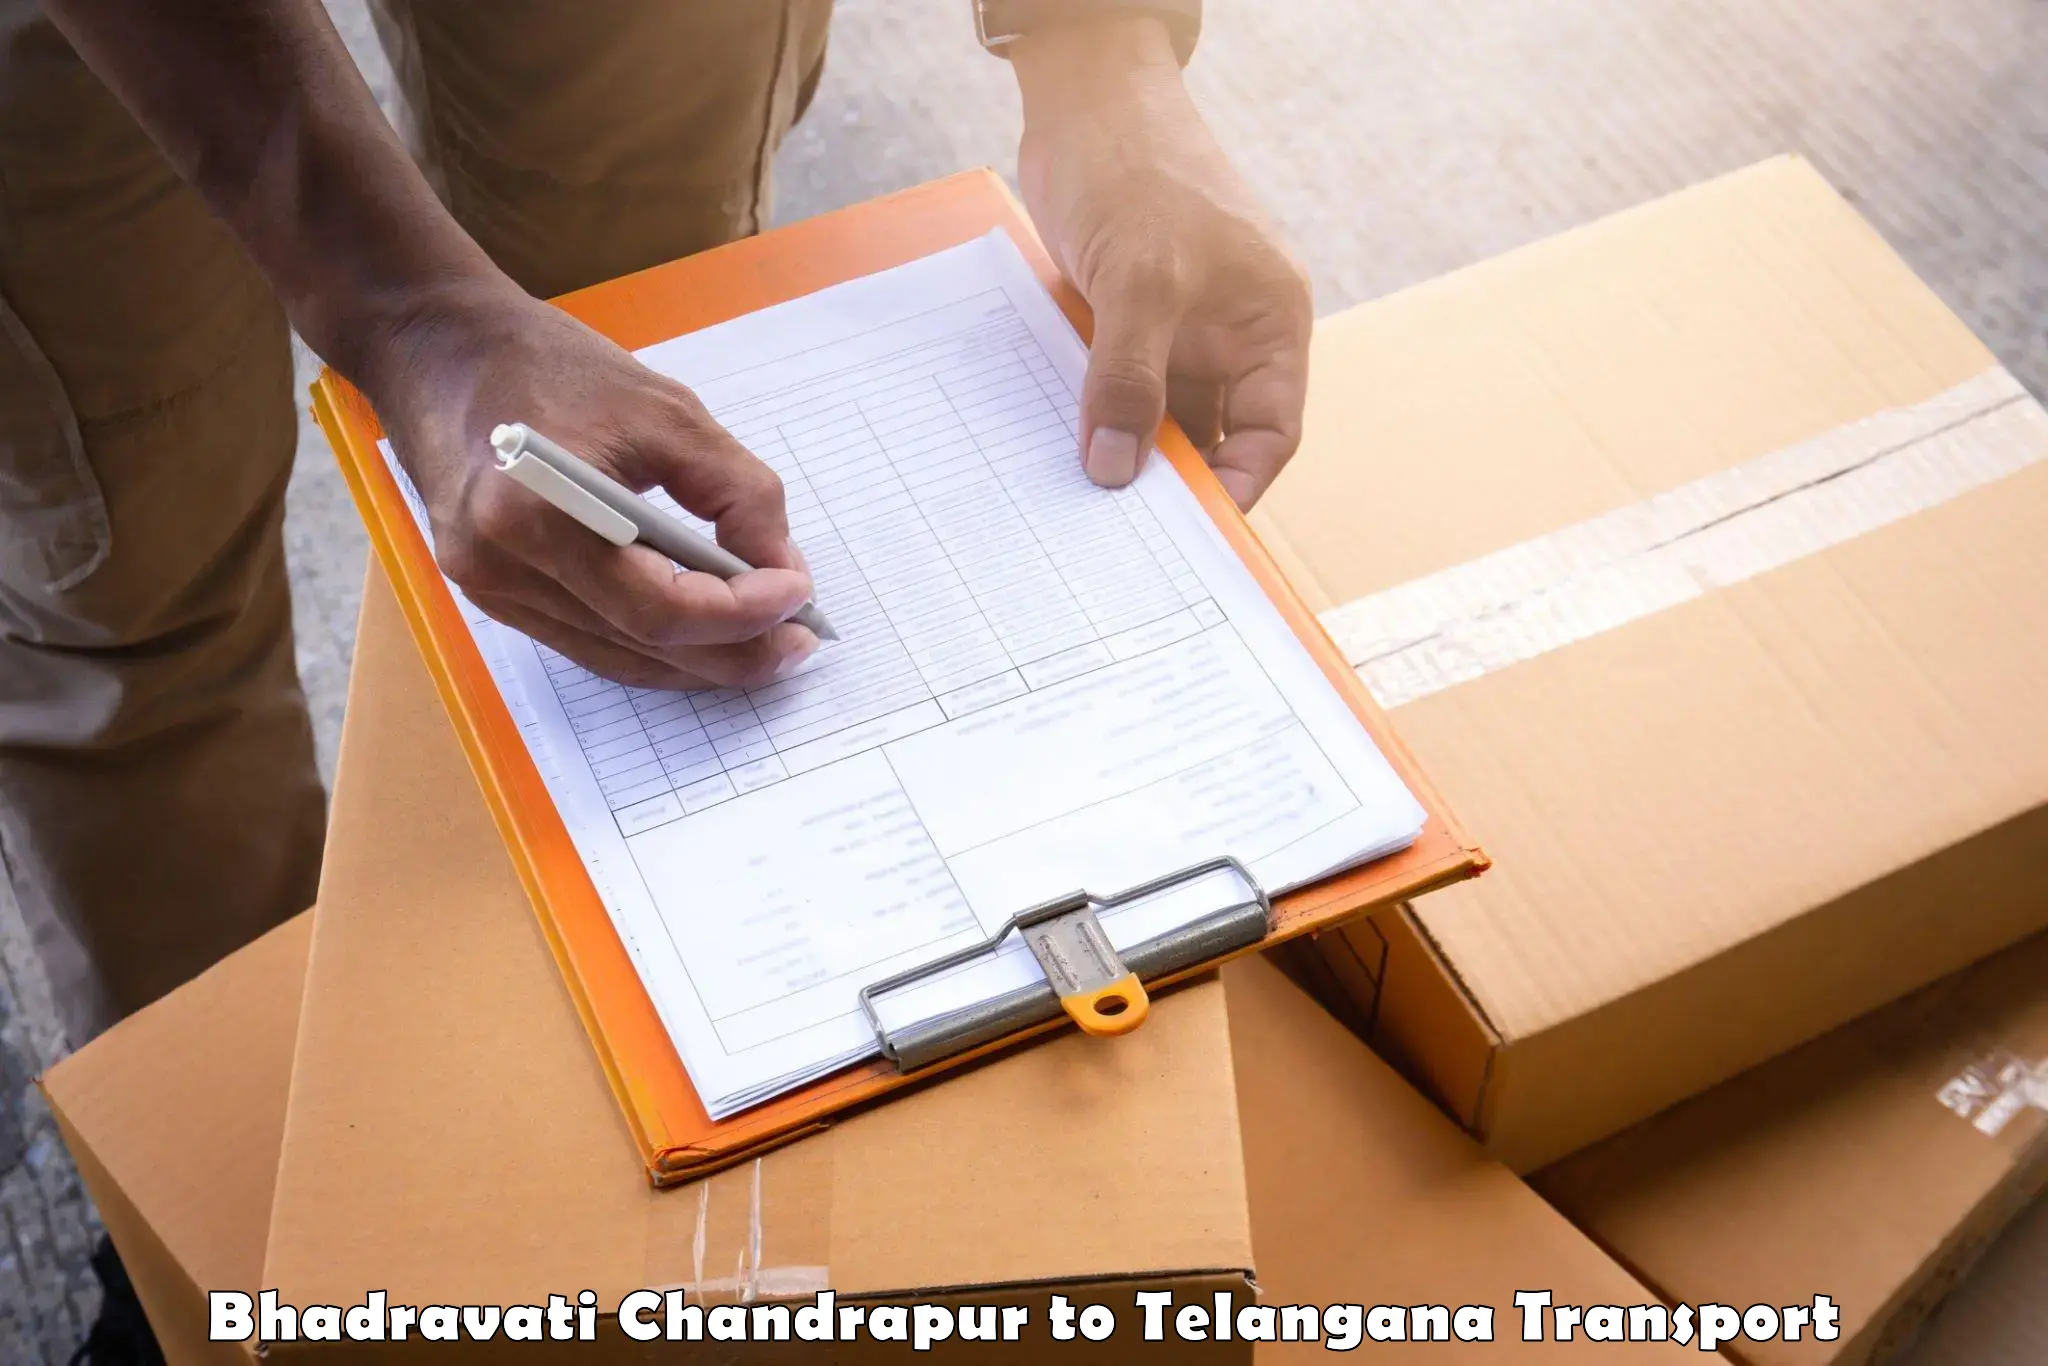 Truck transport companies in India Bhadravati Chandrapur to Mulugu